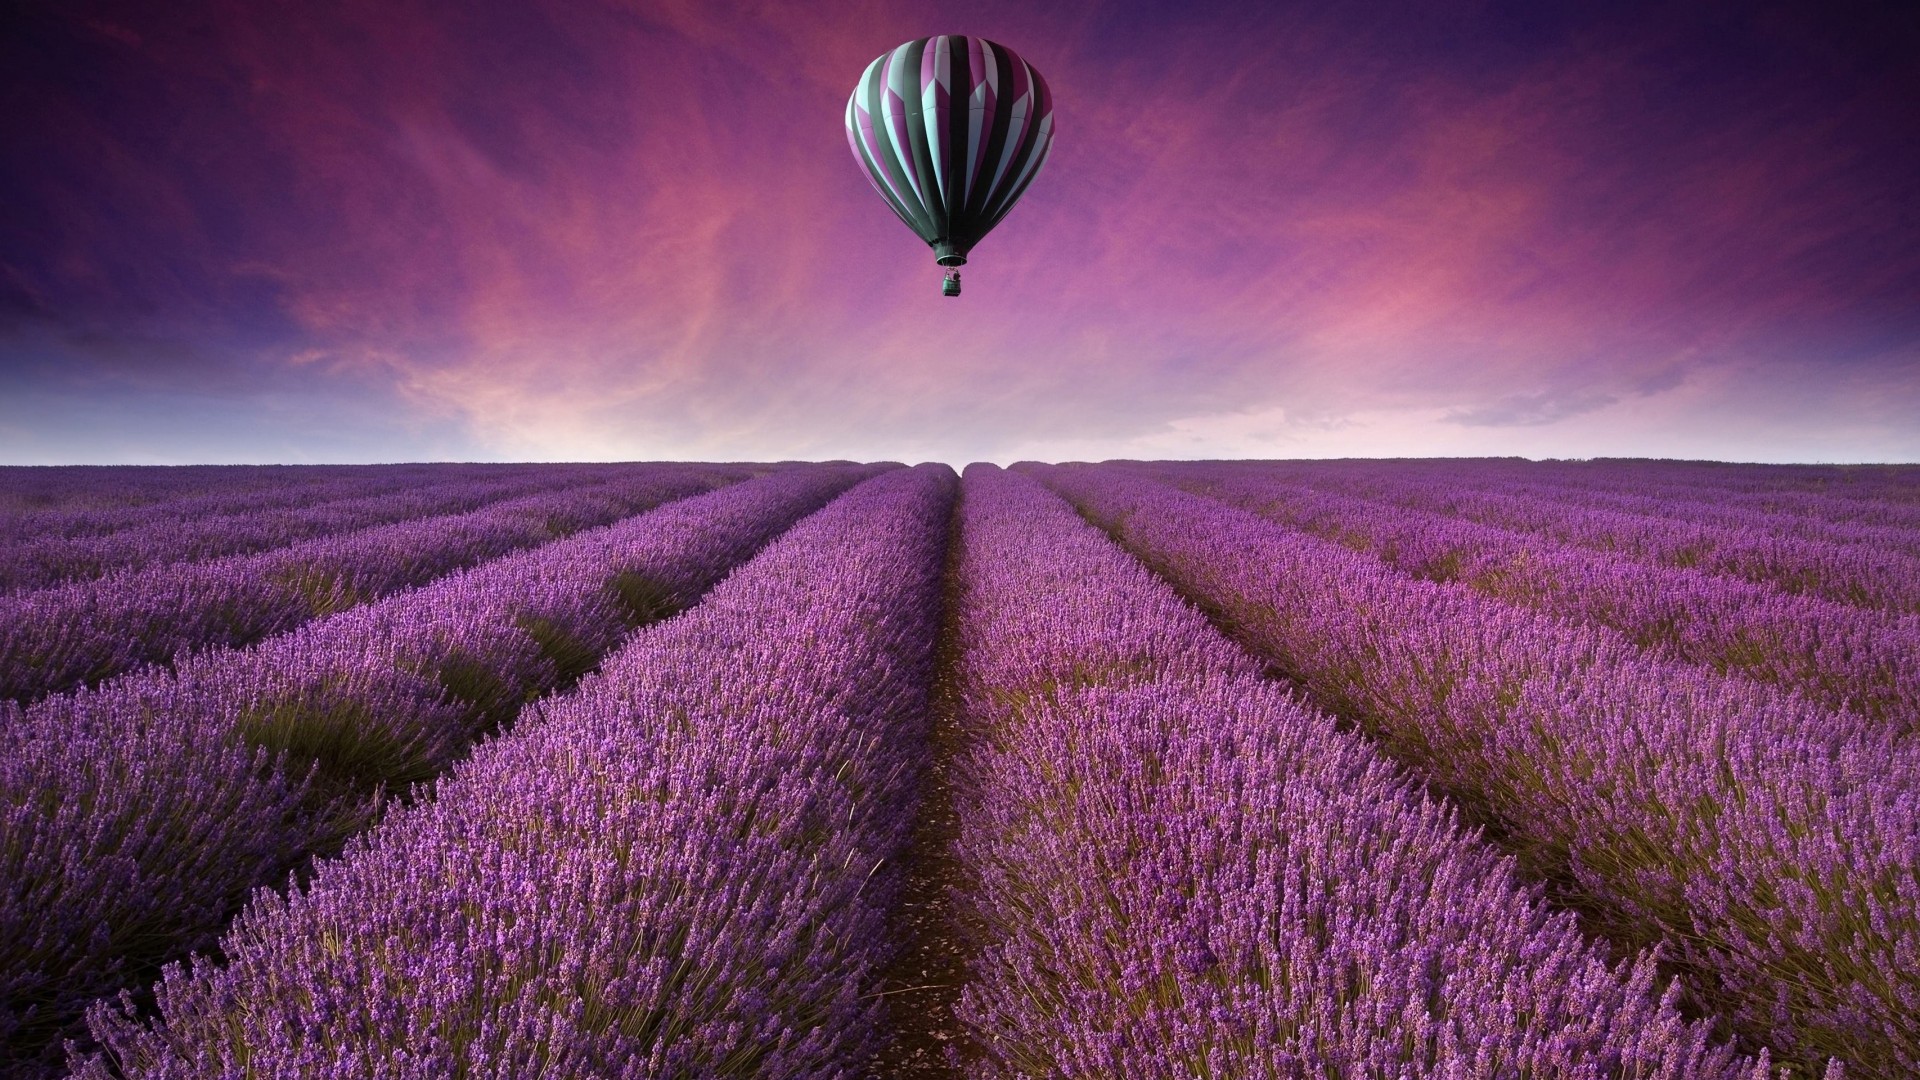 Hot Air Balloon Over Lavender Field Wallpaper for Desktop 1920x1080